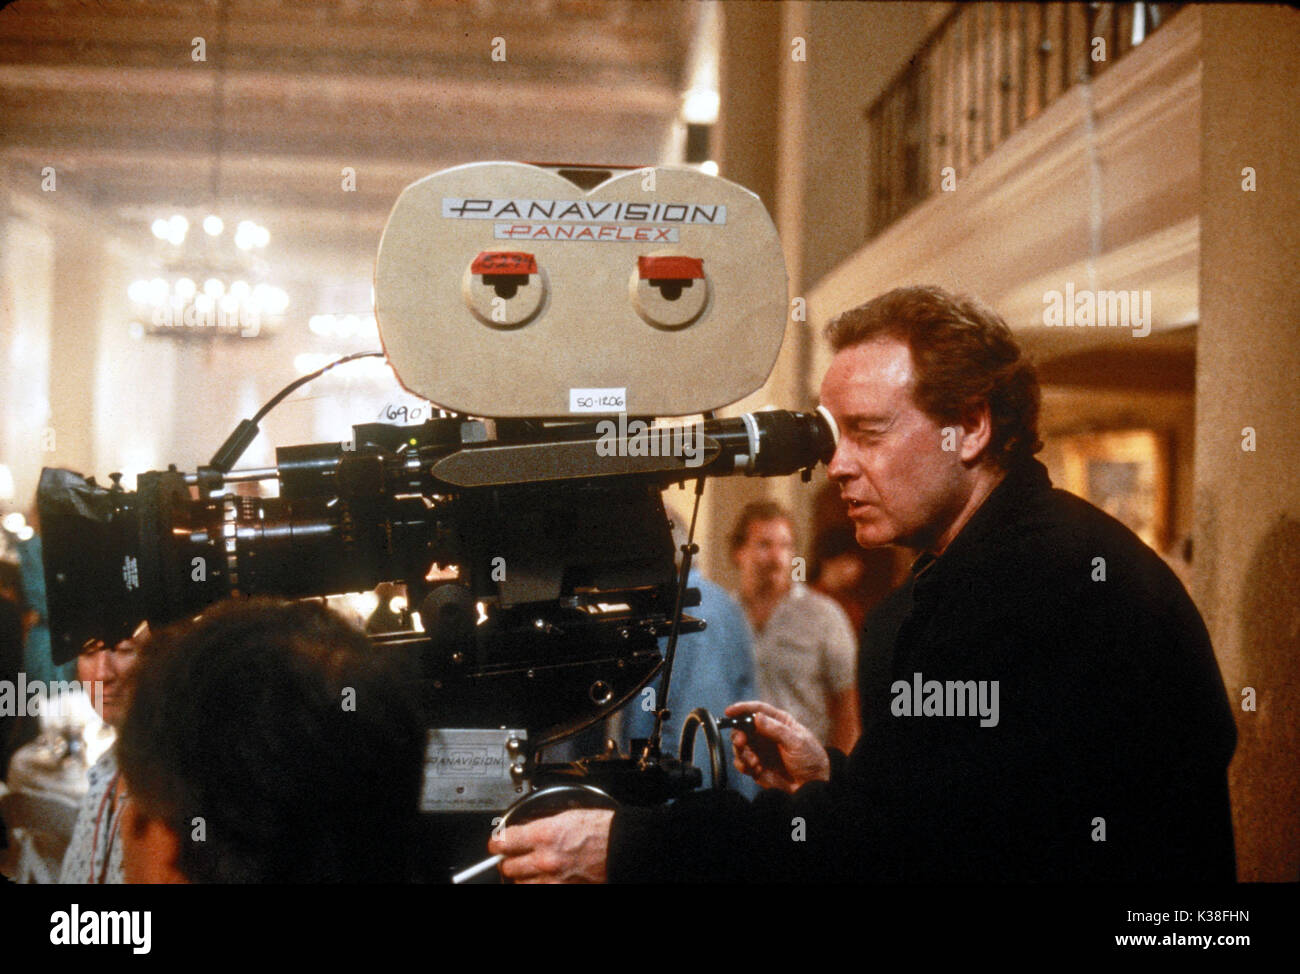 Qualcuno a vegliare su di me di Ridley Scott, direttore data: 1987 Foto Stock